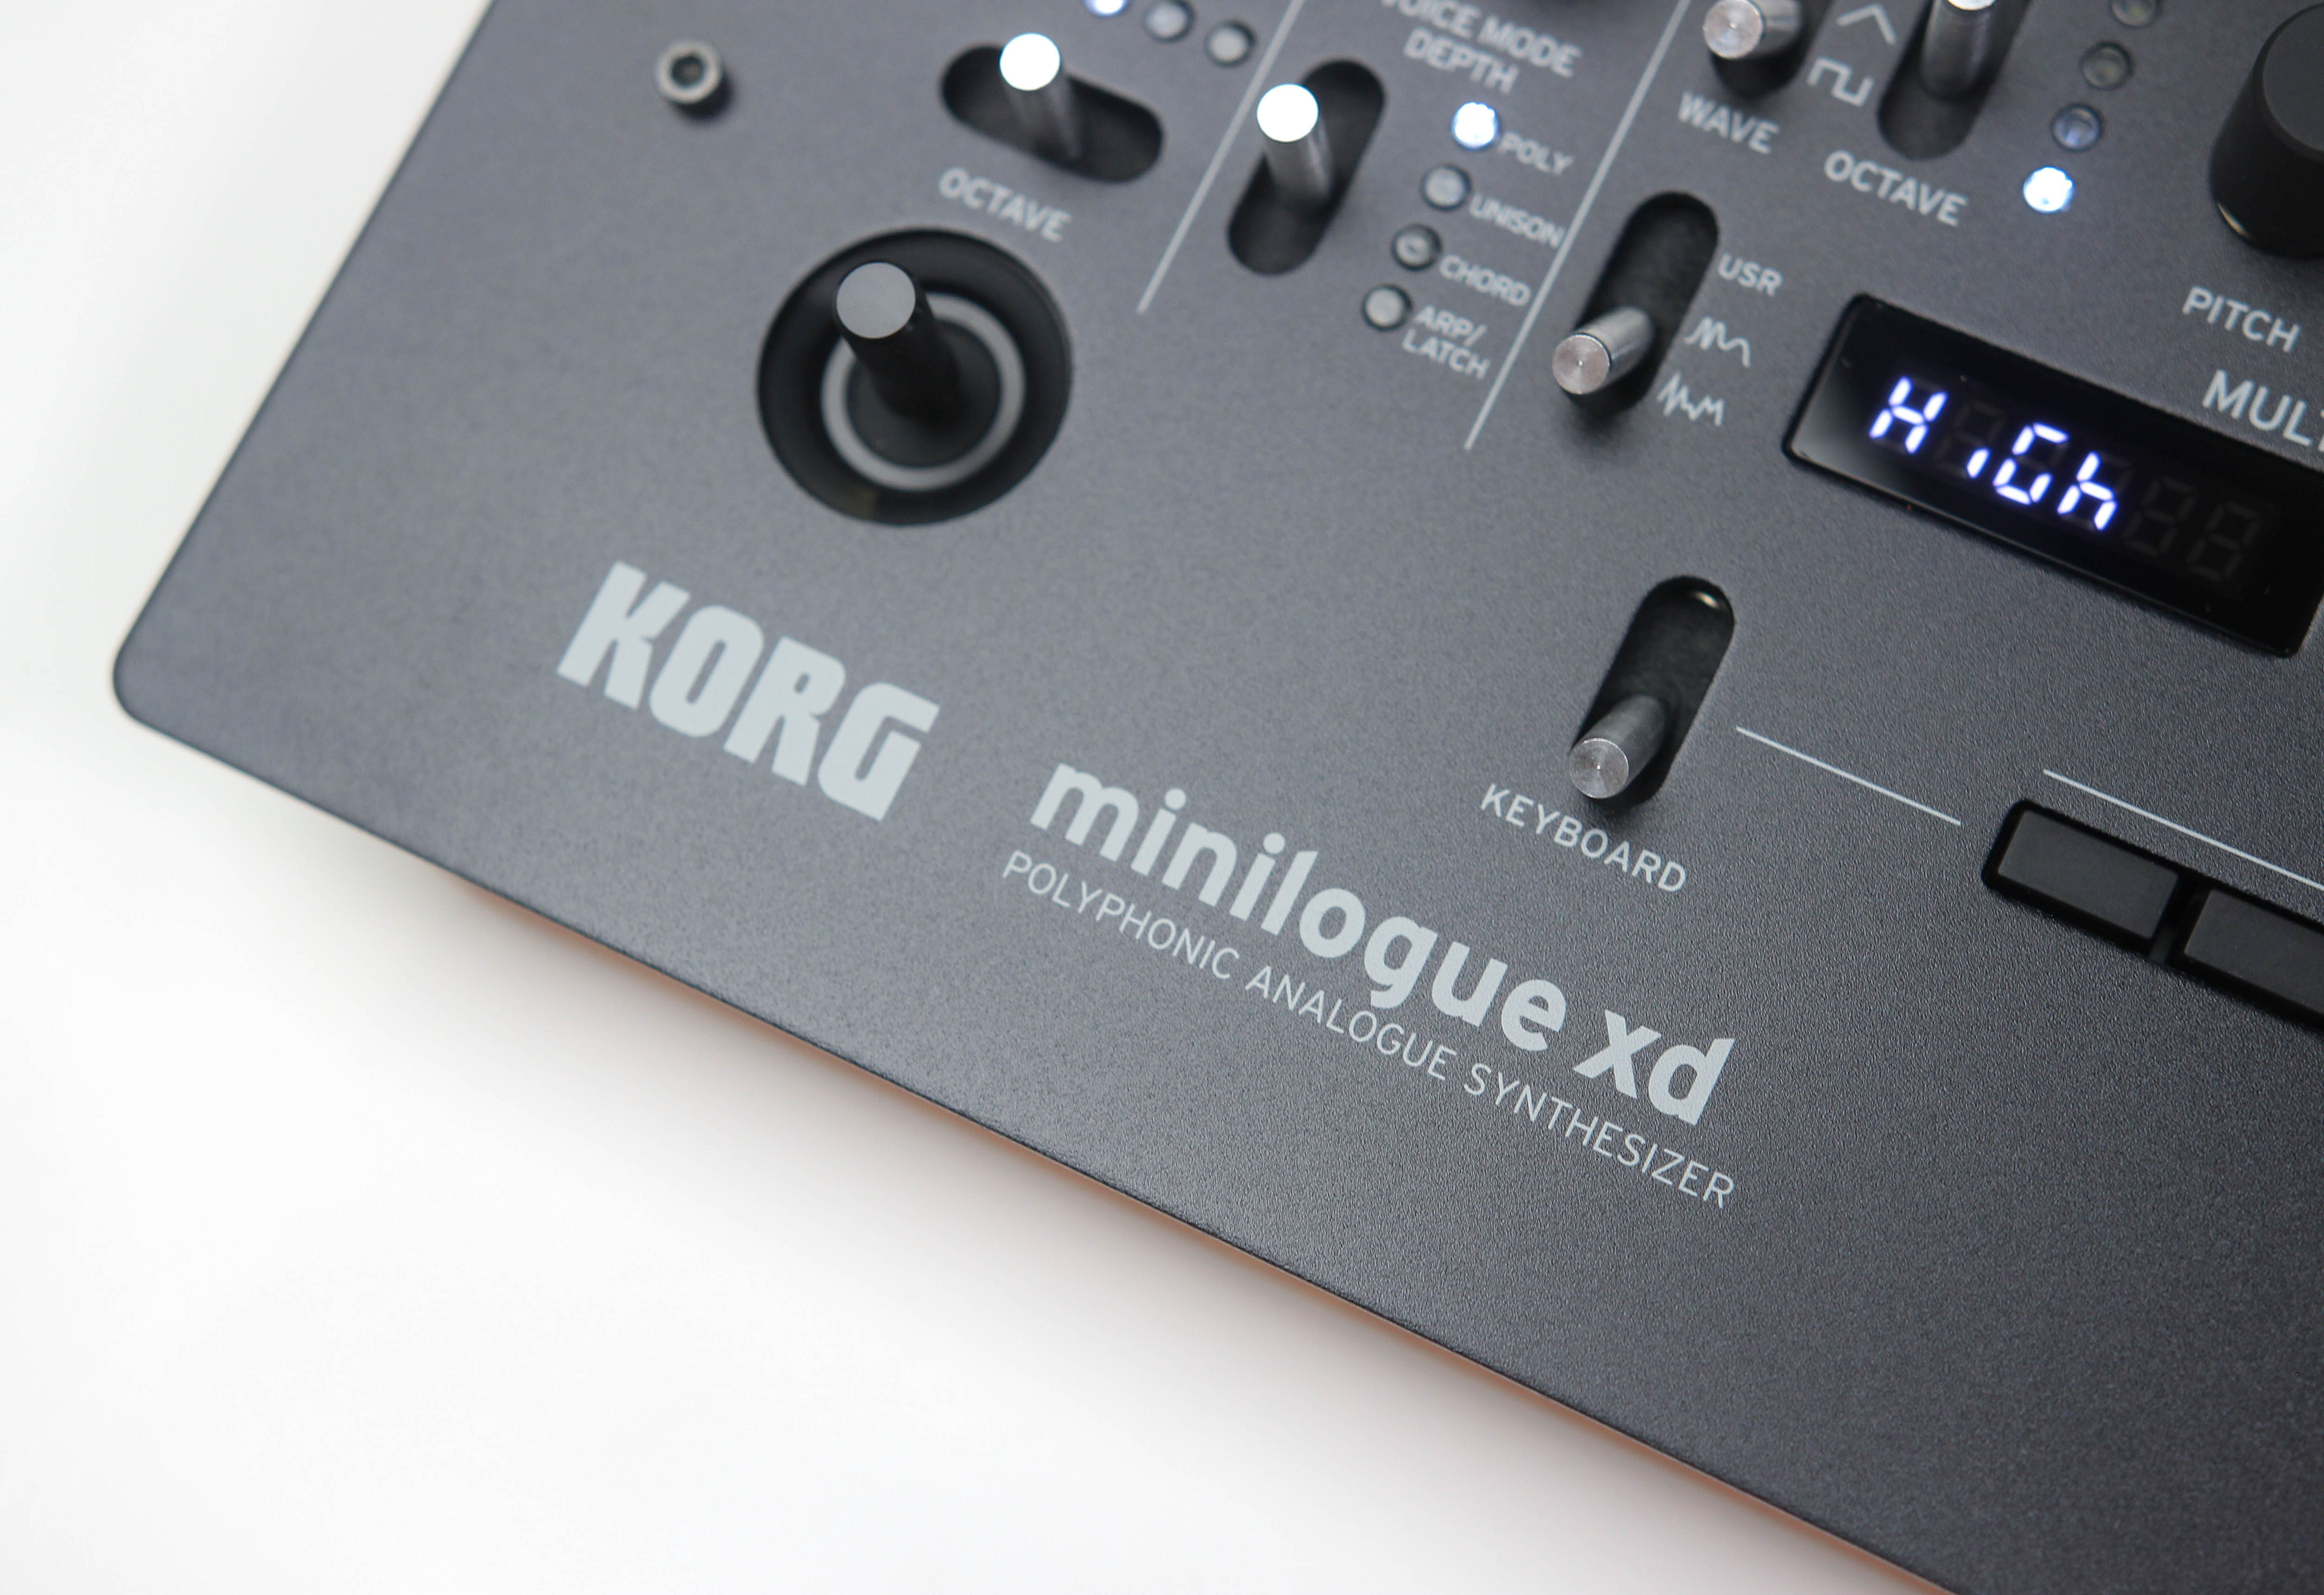 Korg Minilogue XD desktop module